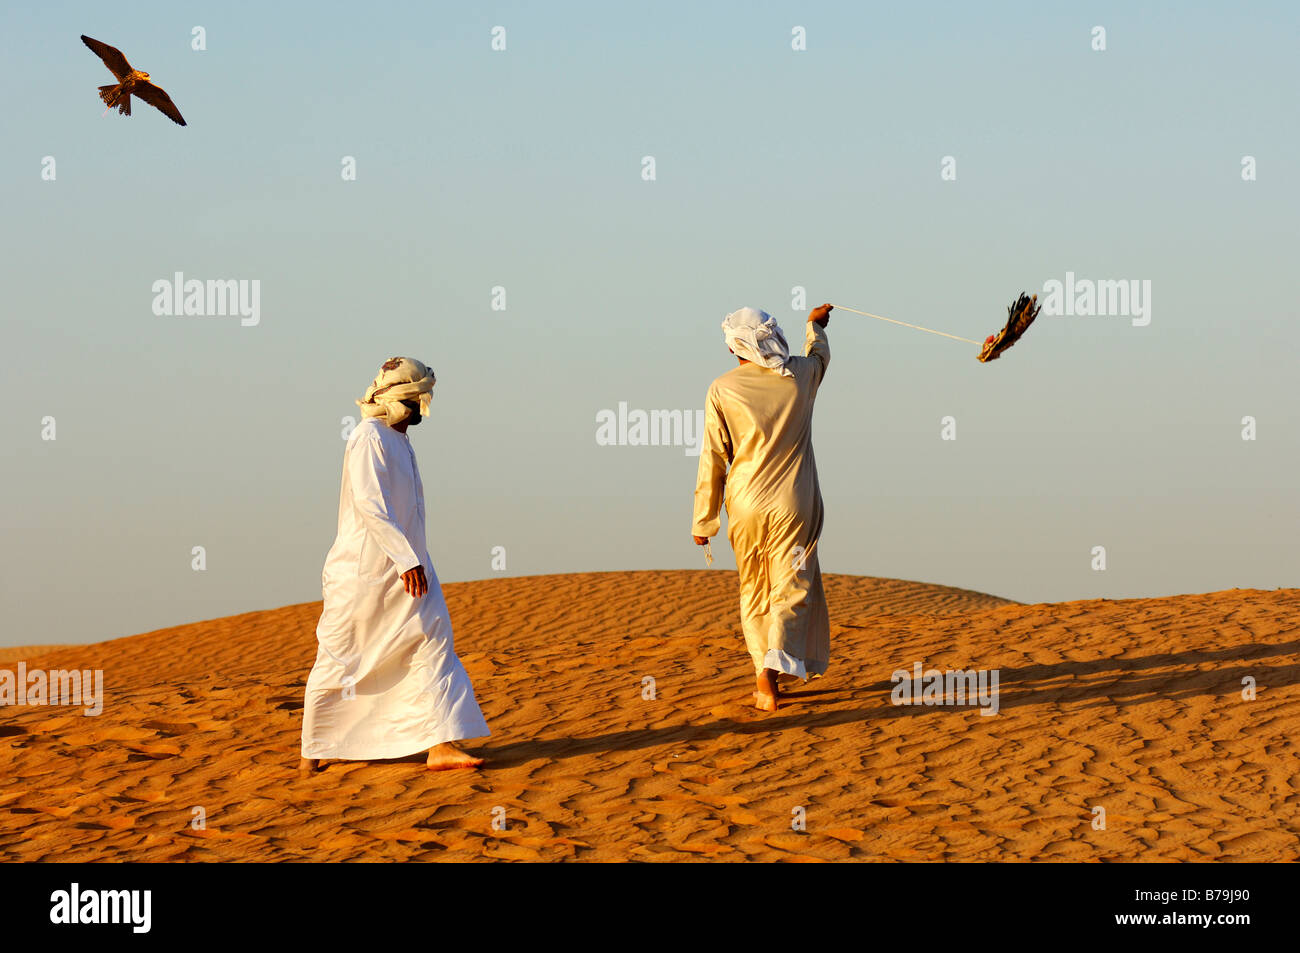 Halcón de caza atacando a una presa durante una lección de formación ficticia, Dubai, Emiratos Árabes Unidos, EAU Foto de stock